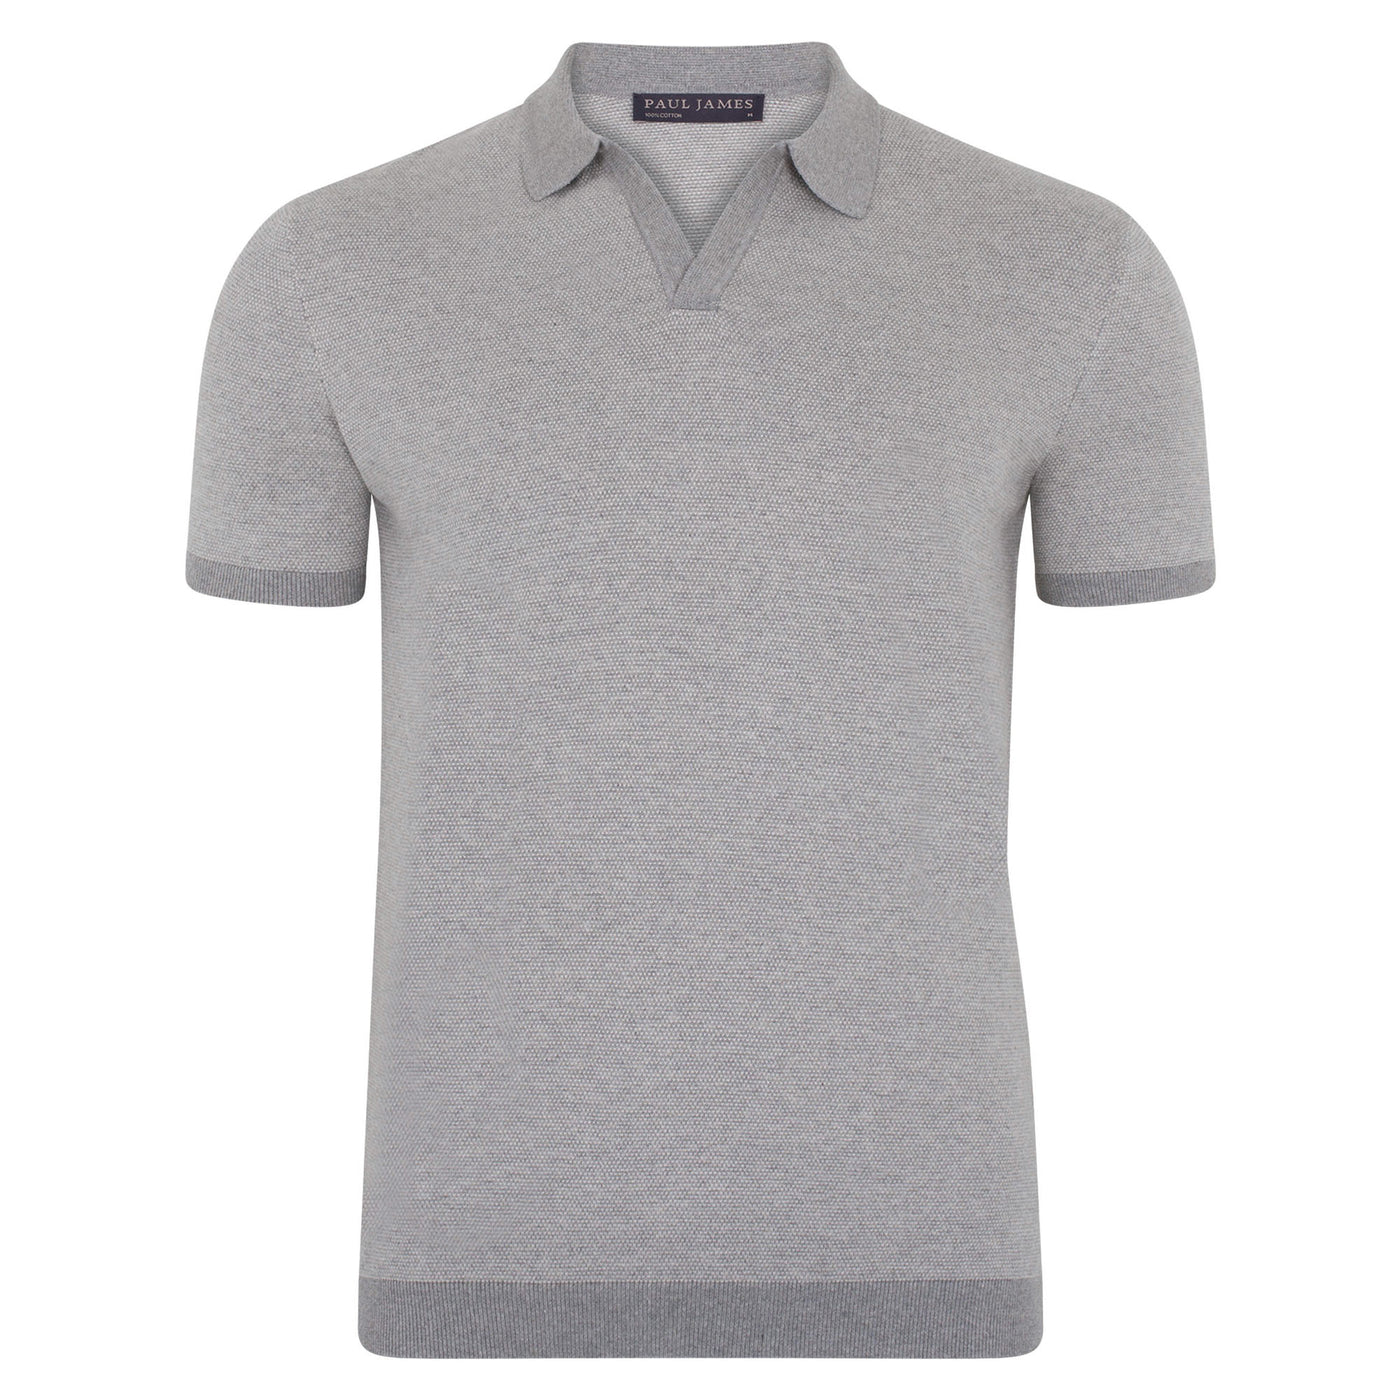 grey mens buttonless polo shirt